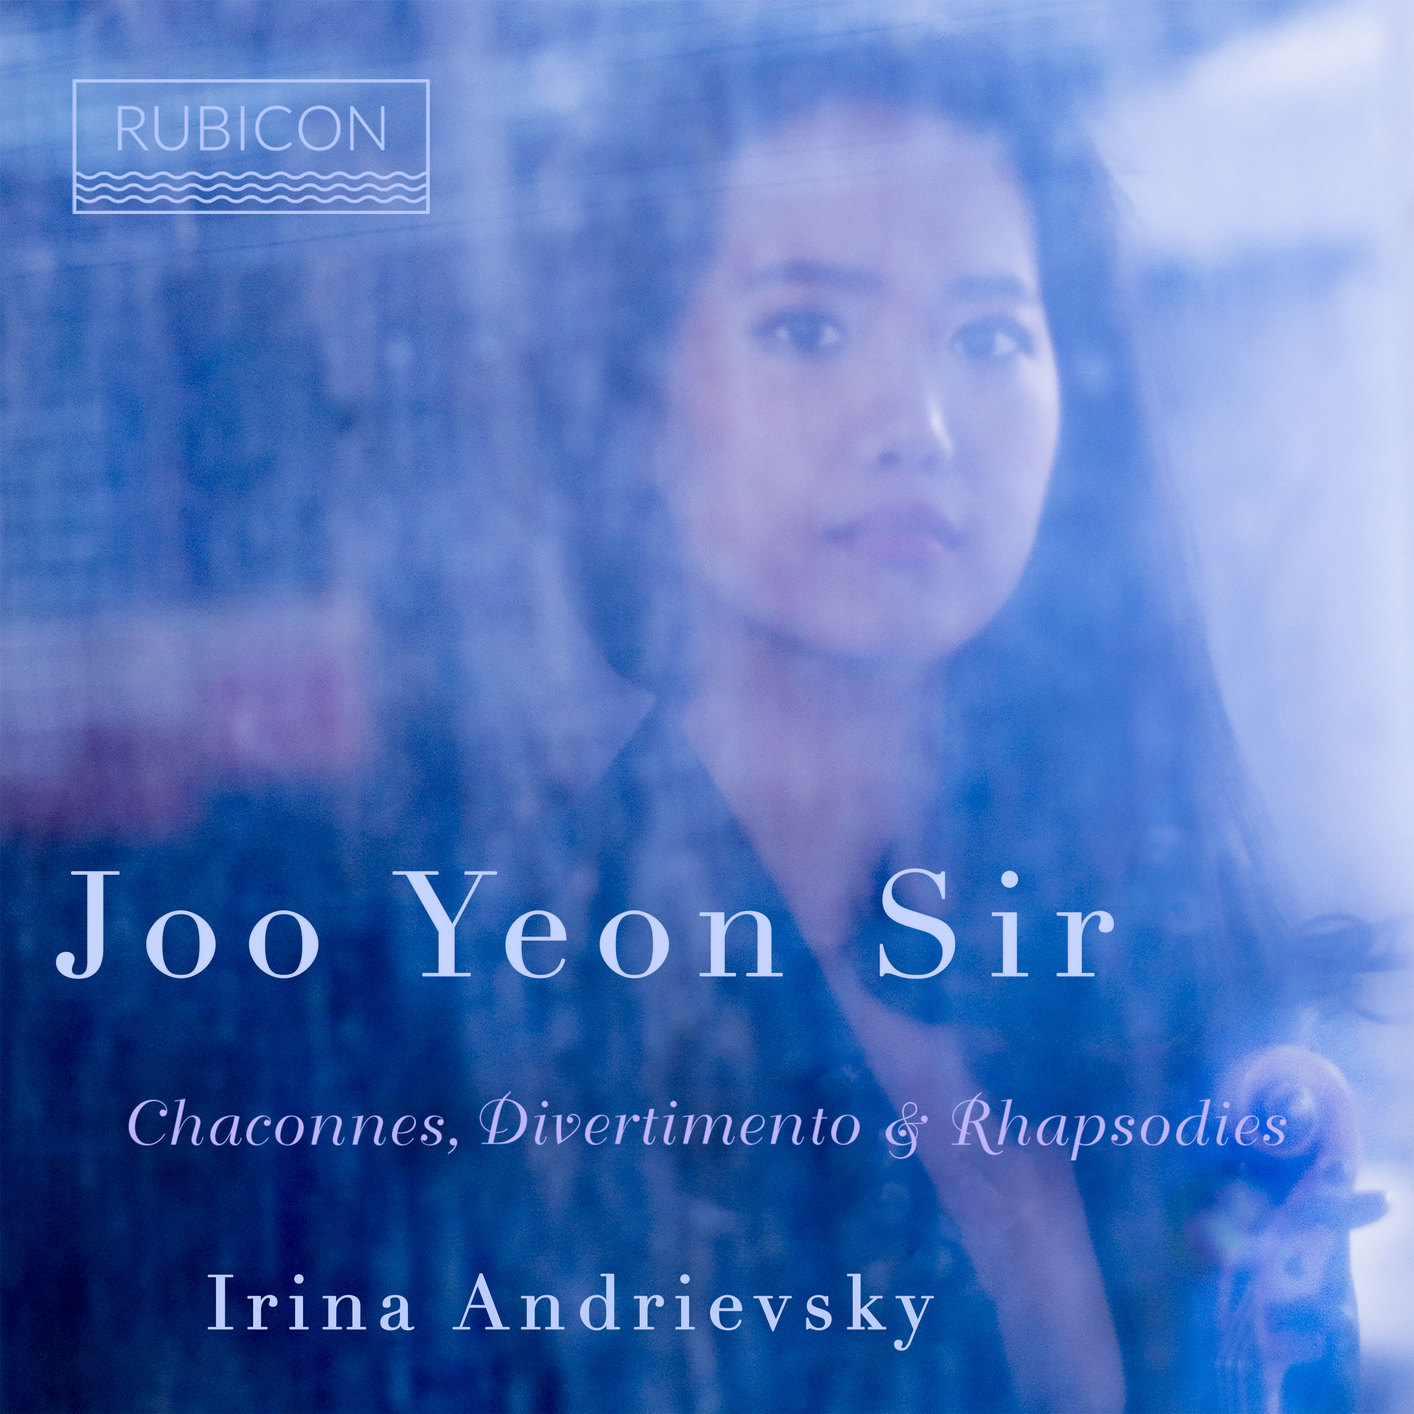 Joo Yeon Sir & Irina Andrievsky - Chaconnes, Divertimento & Rhapsodies (2019) [FLAC 24bit/96kHz]